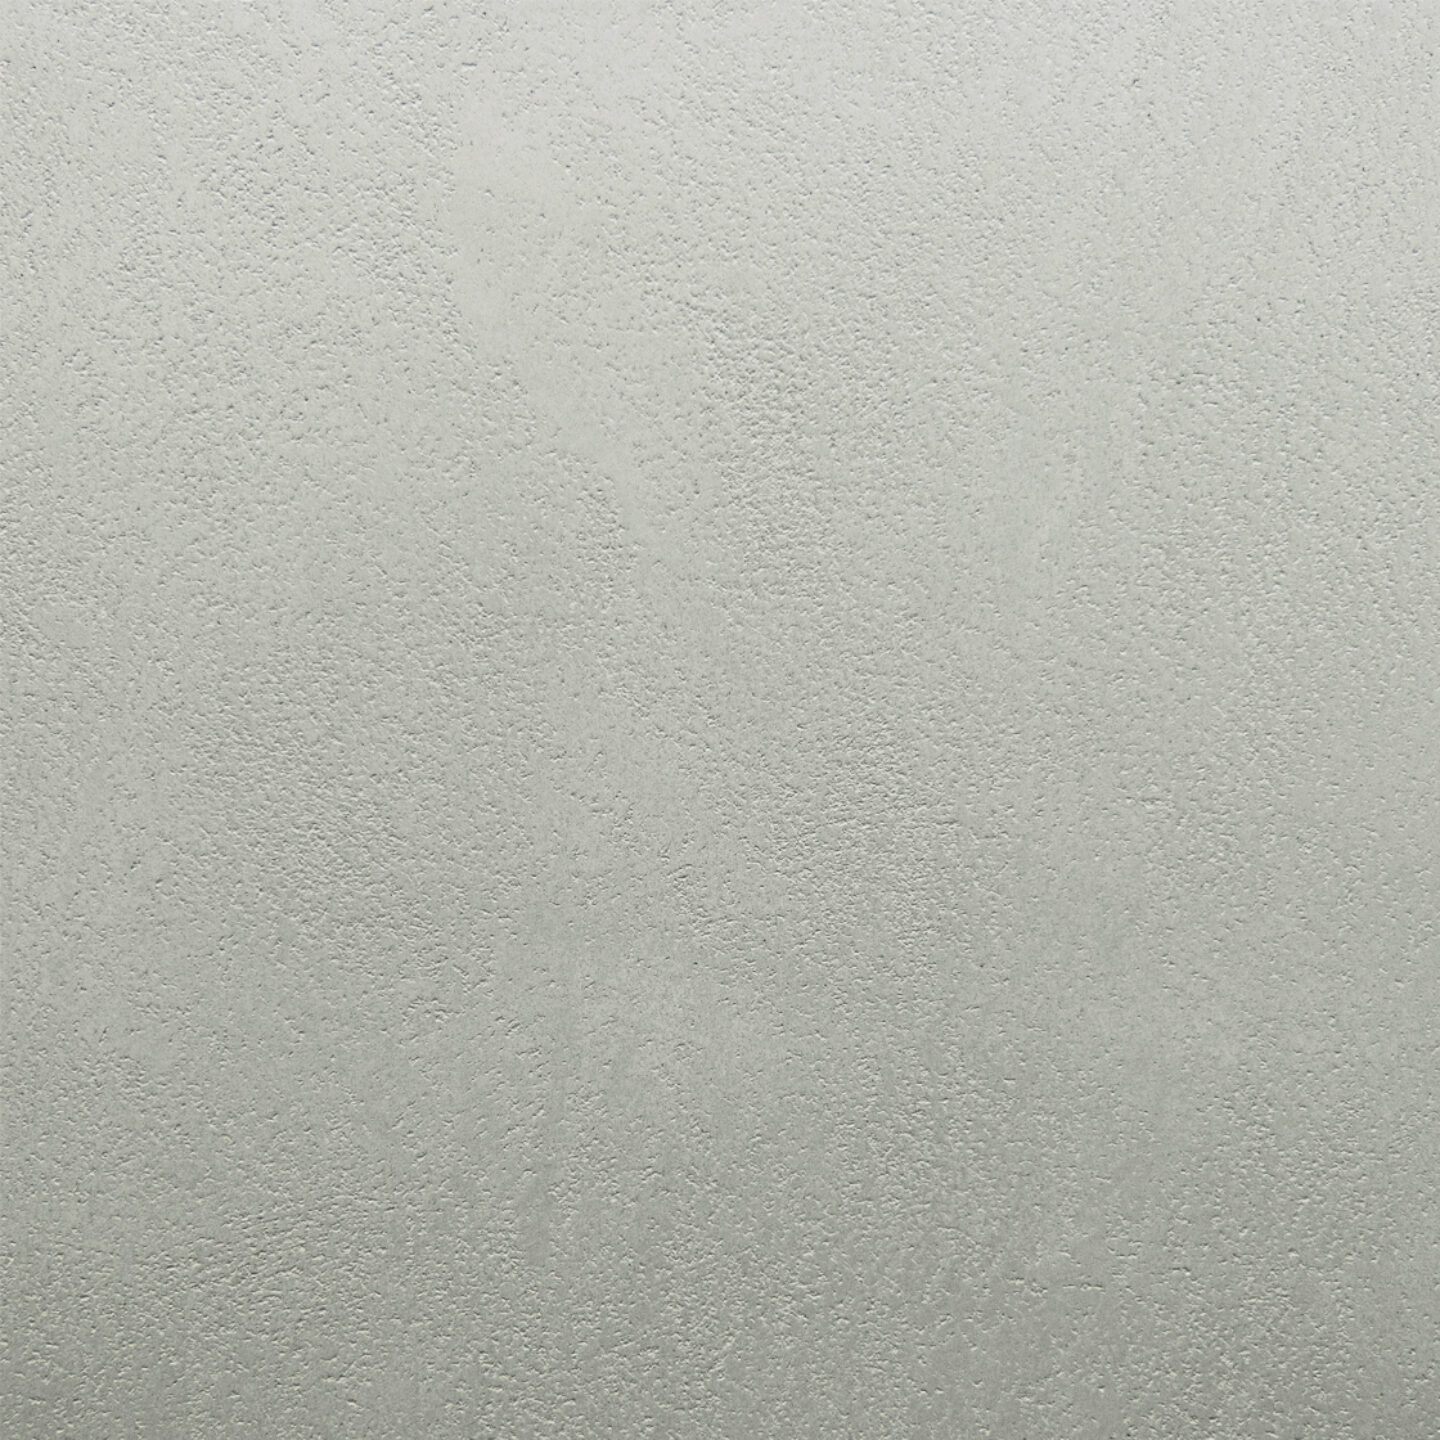 Close up of Armourcoat leatherstone exterior polished plaster finish - 70